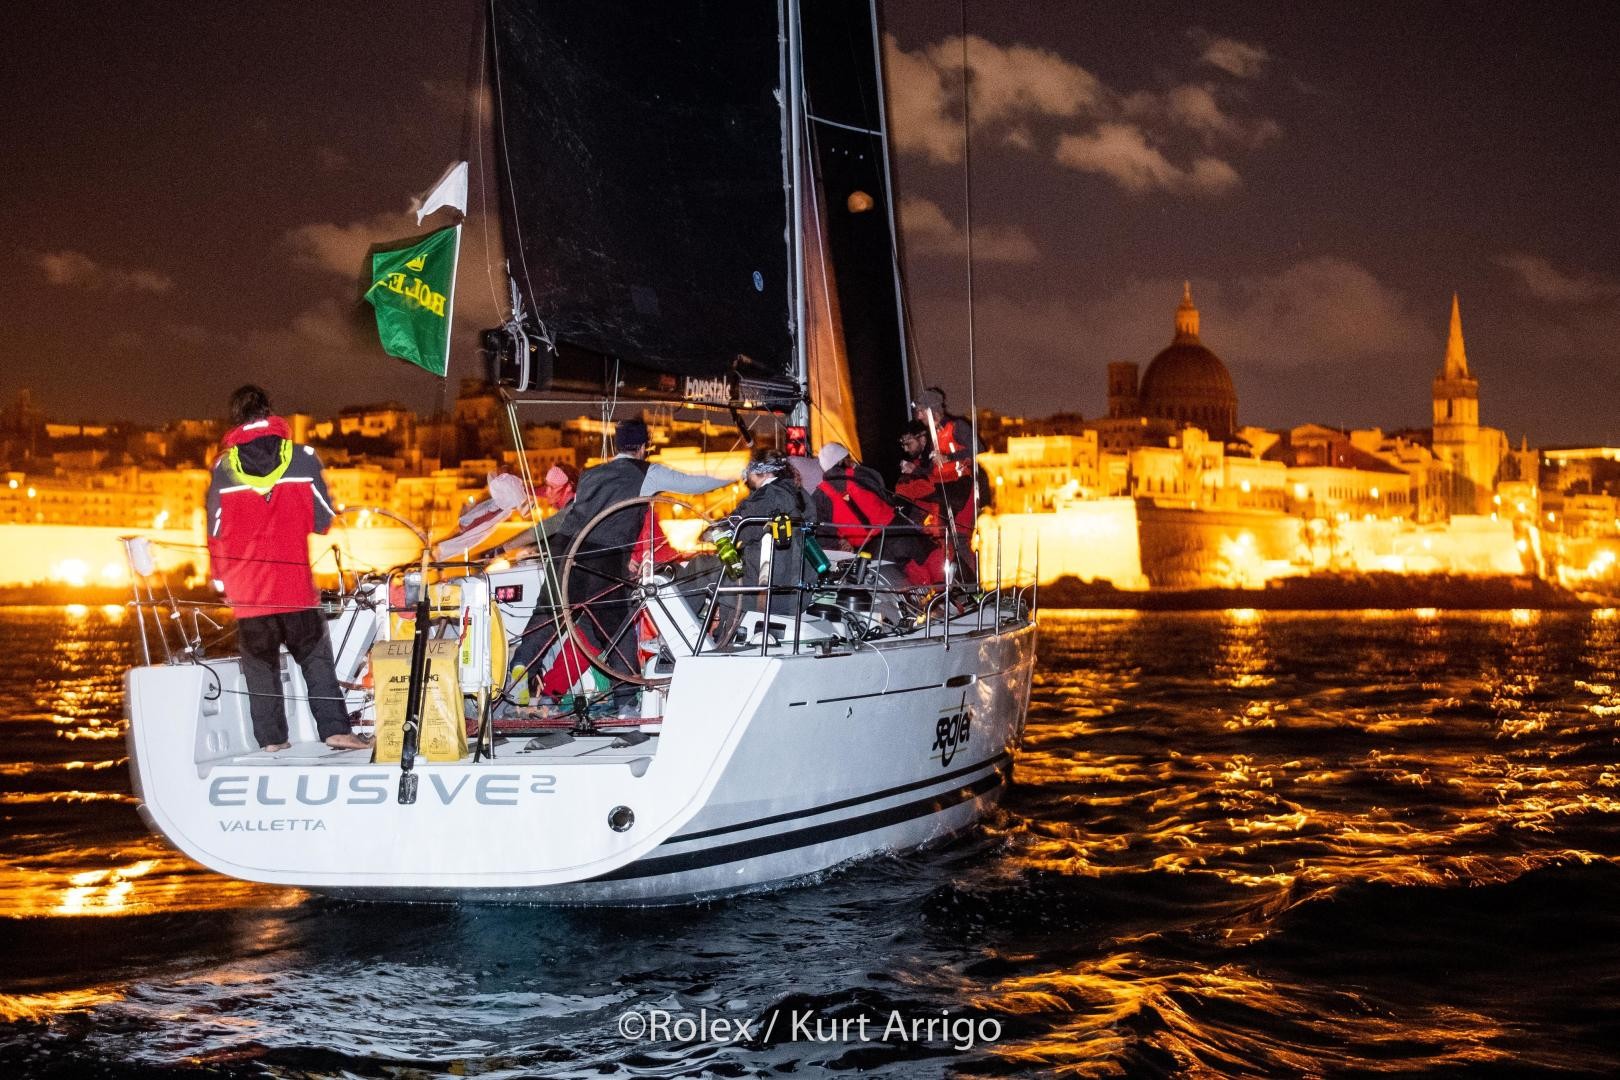 Elusive 2 arrives at La Valletta, Malta. ph.Kurt Arrigo/Rolex